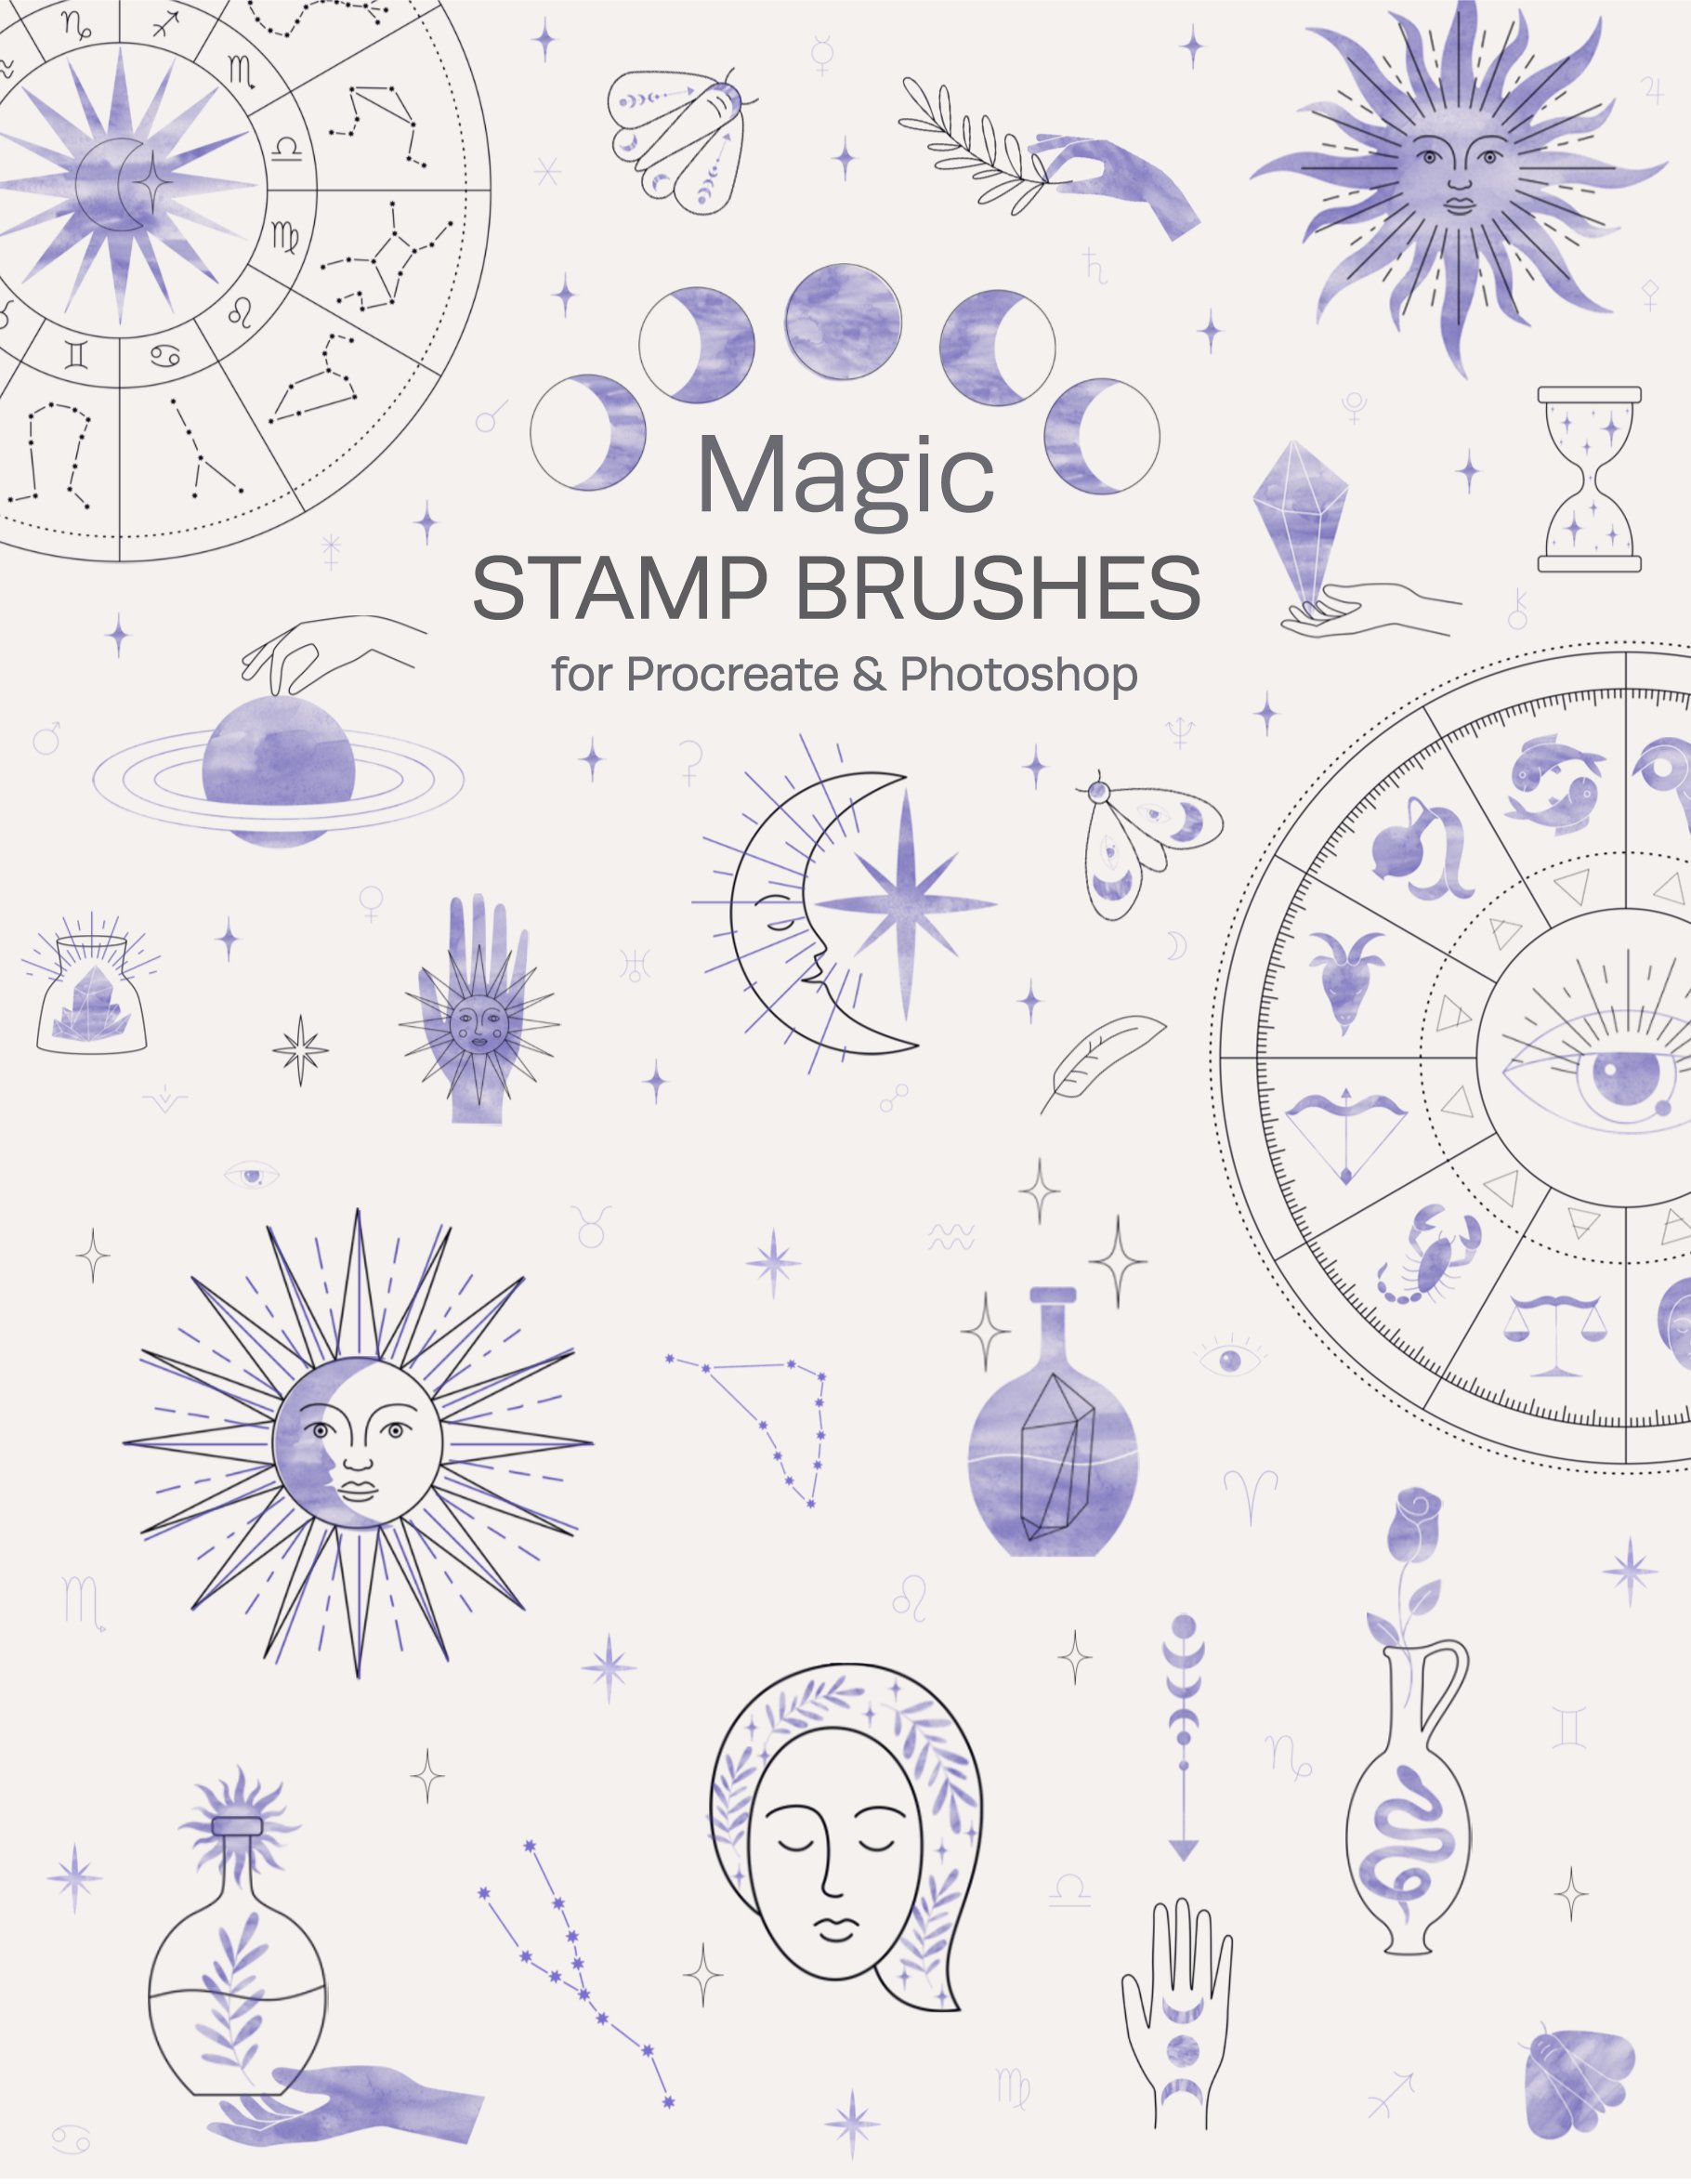 Magic Stamp Brushes for Procreatecover image.